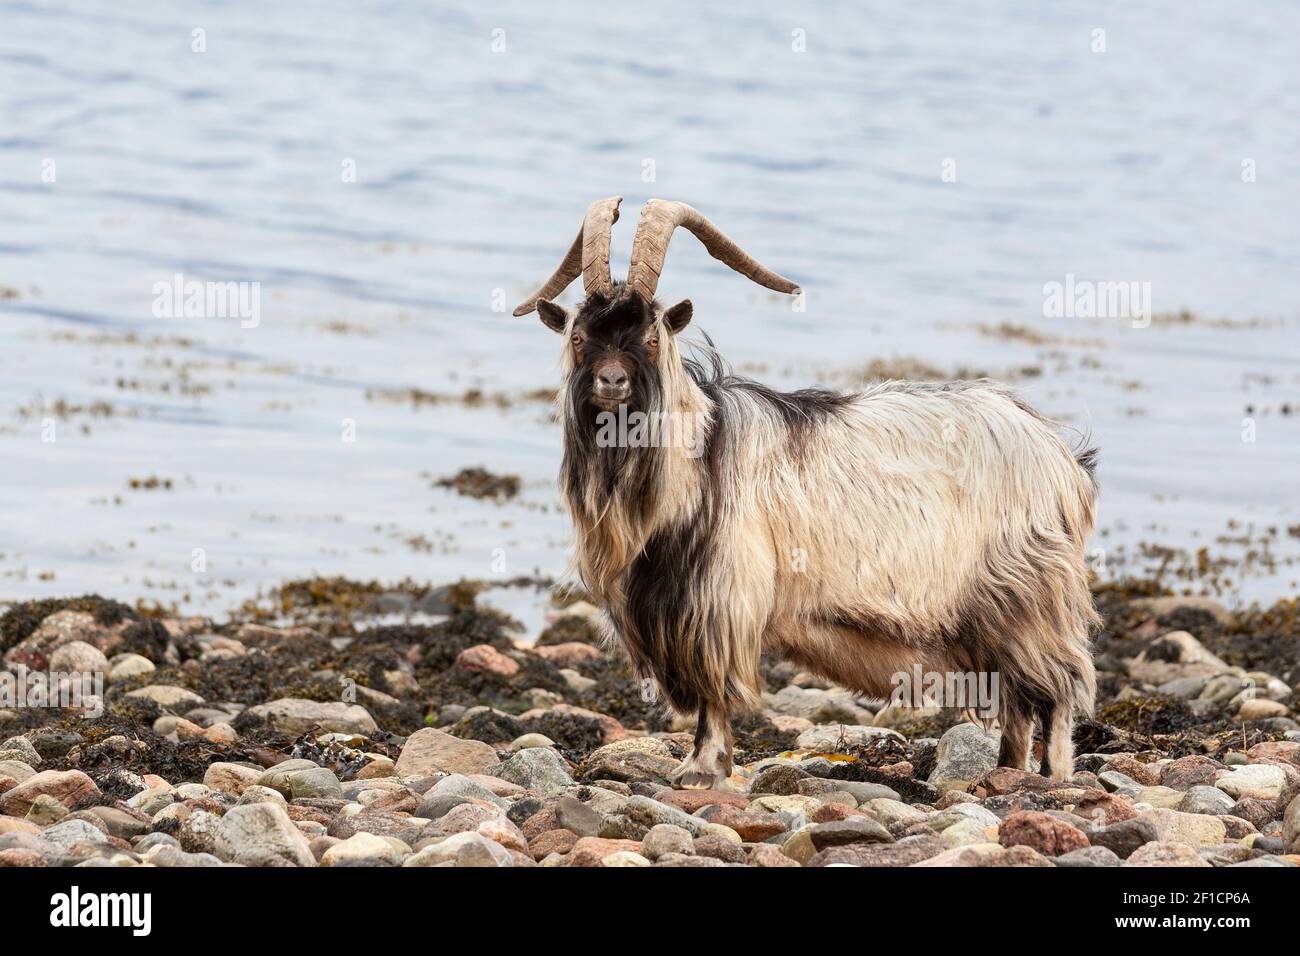 Wild goat (Capra hircus), shore of Loch Linnhe, West Scotland Stock Photo